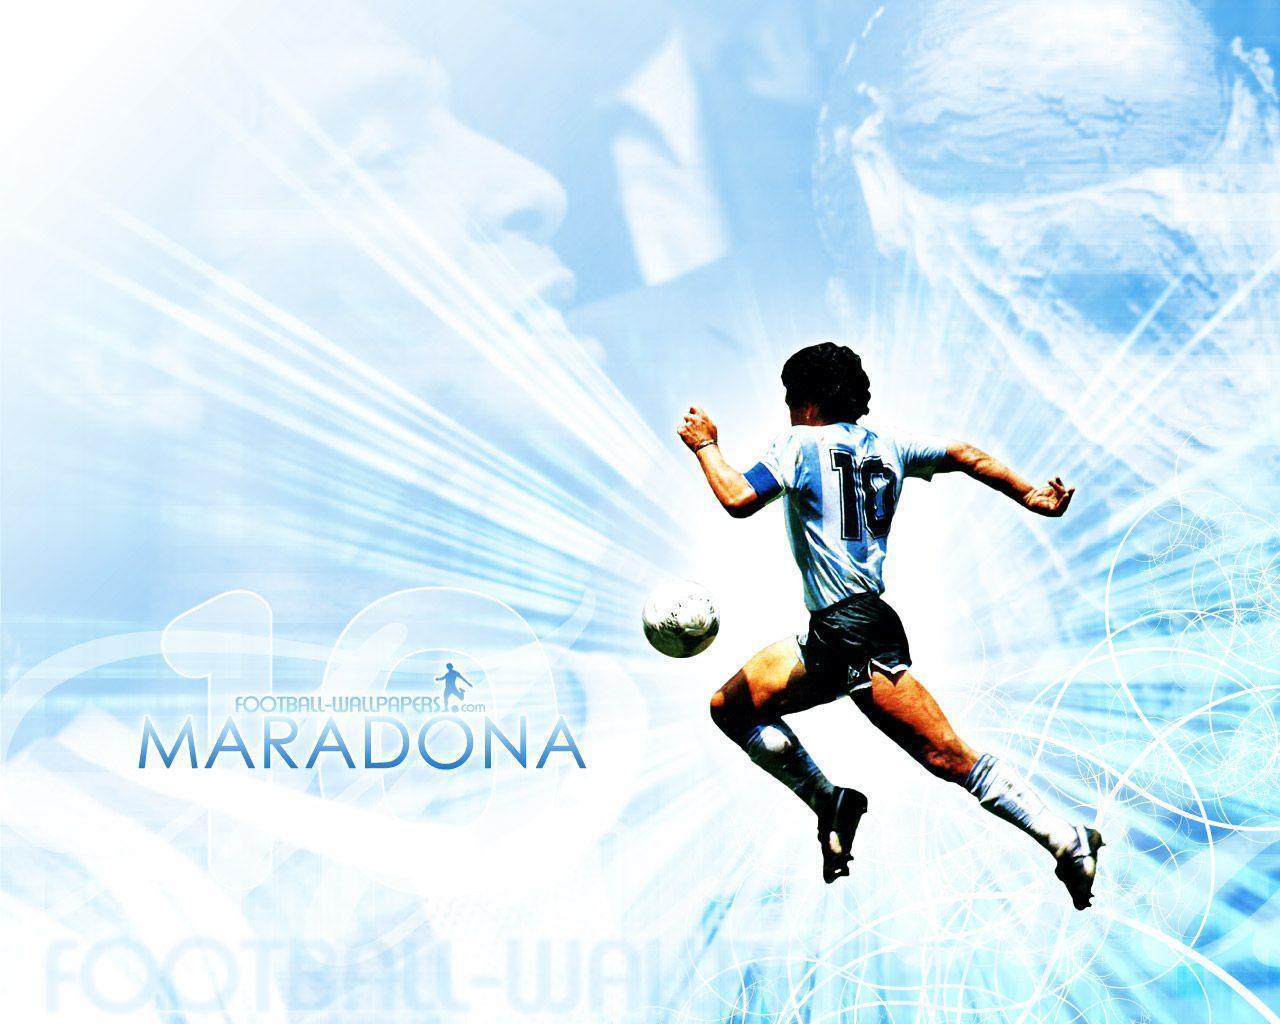 trololo blogg: Wallpaper Diego Maradona